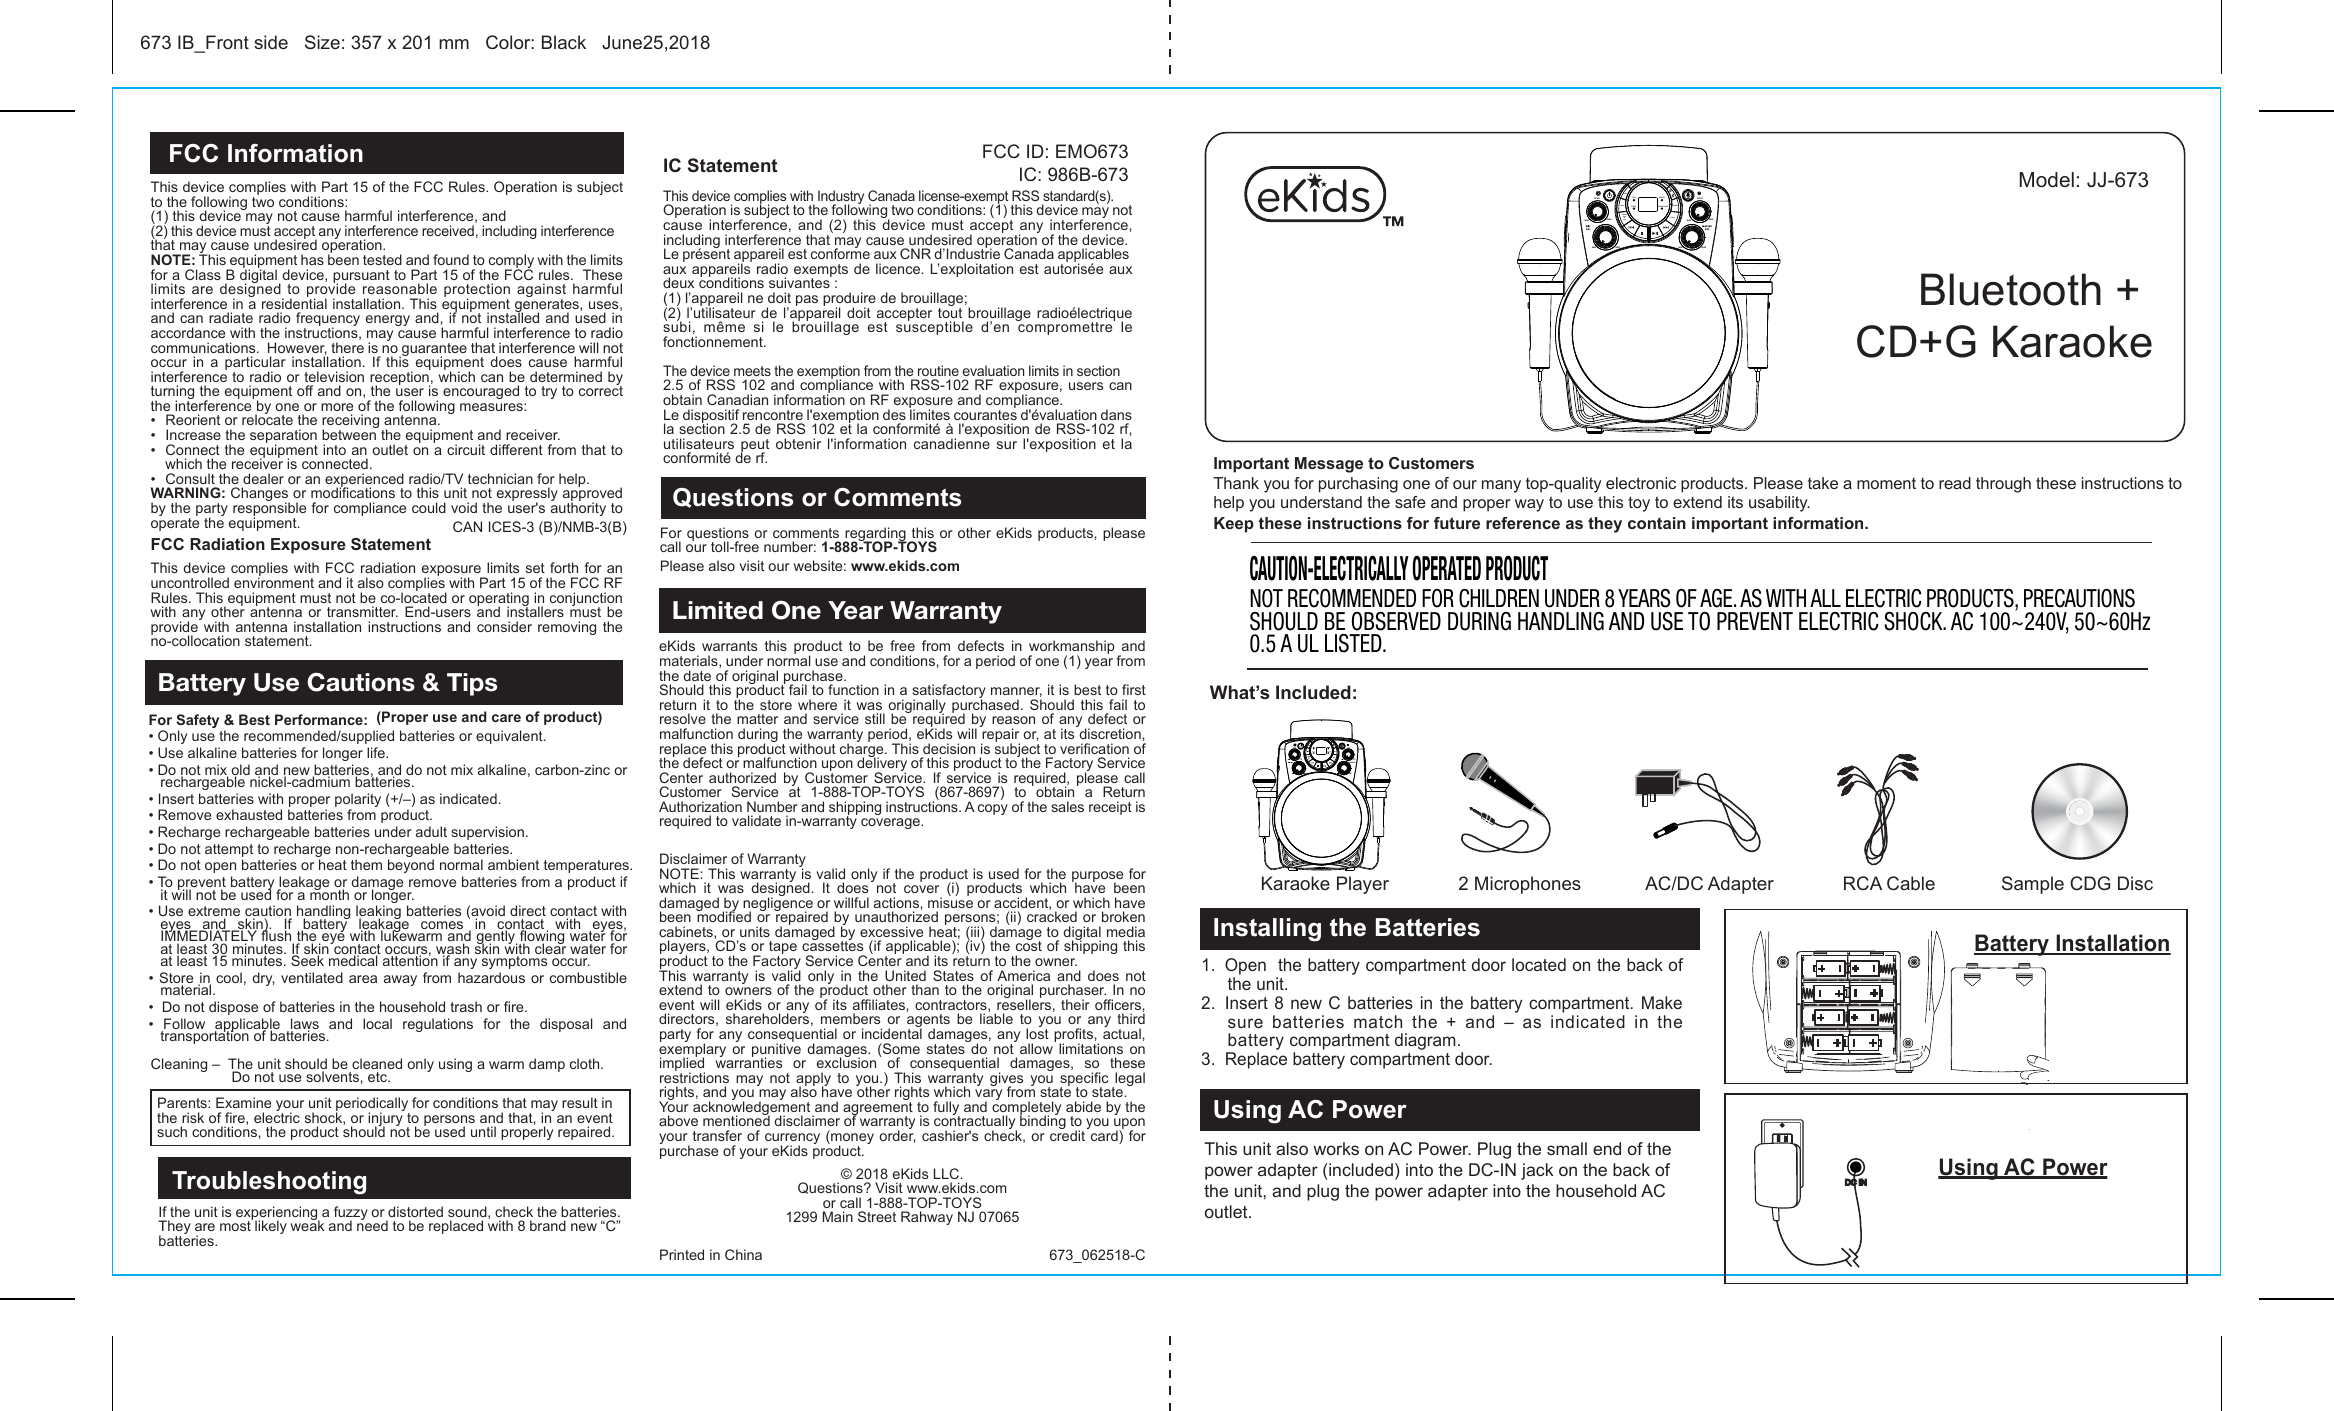 Page 1 of SDI Technologies 673 Bluetooth + CD+G Karaoke User Manual XX 673 IB v14